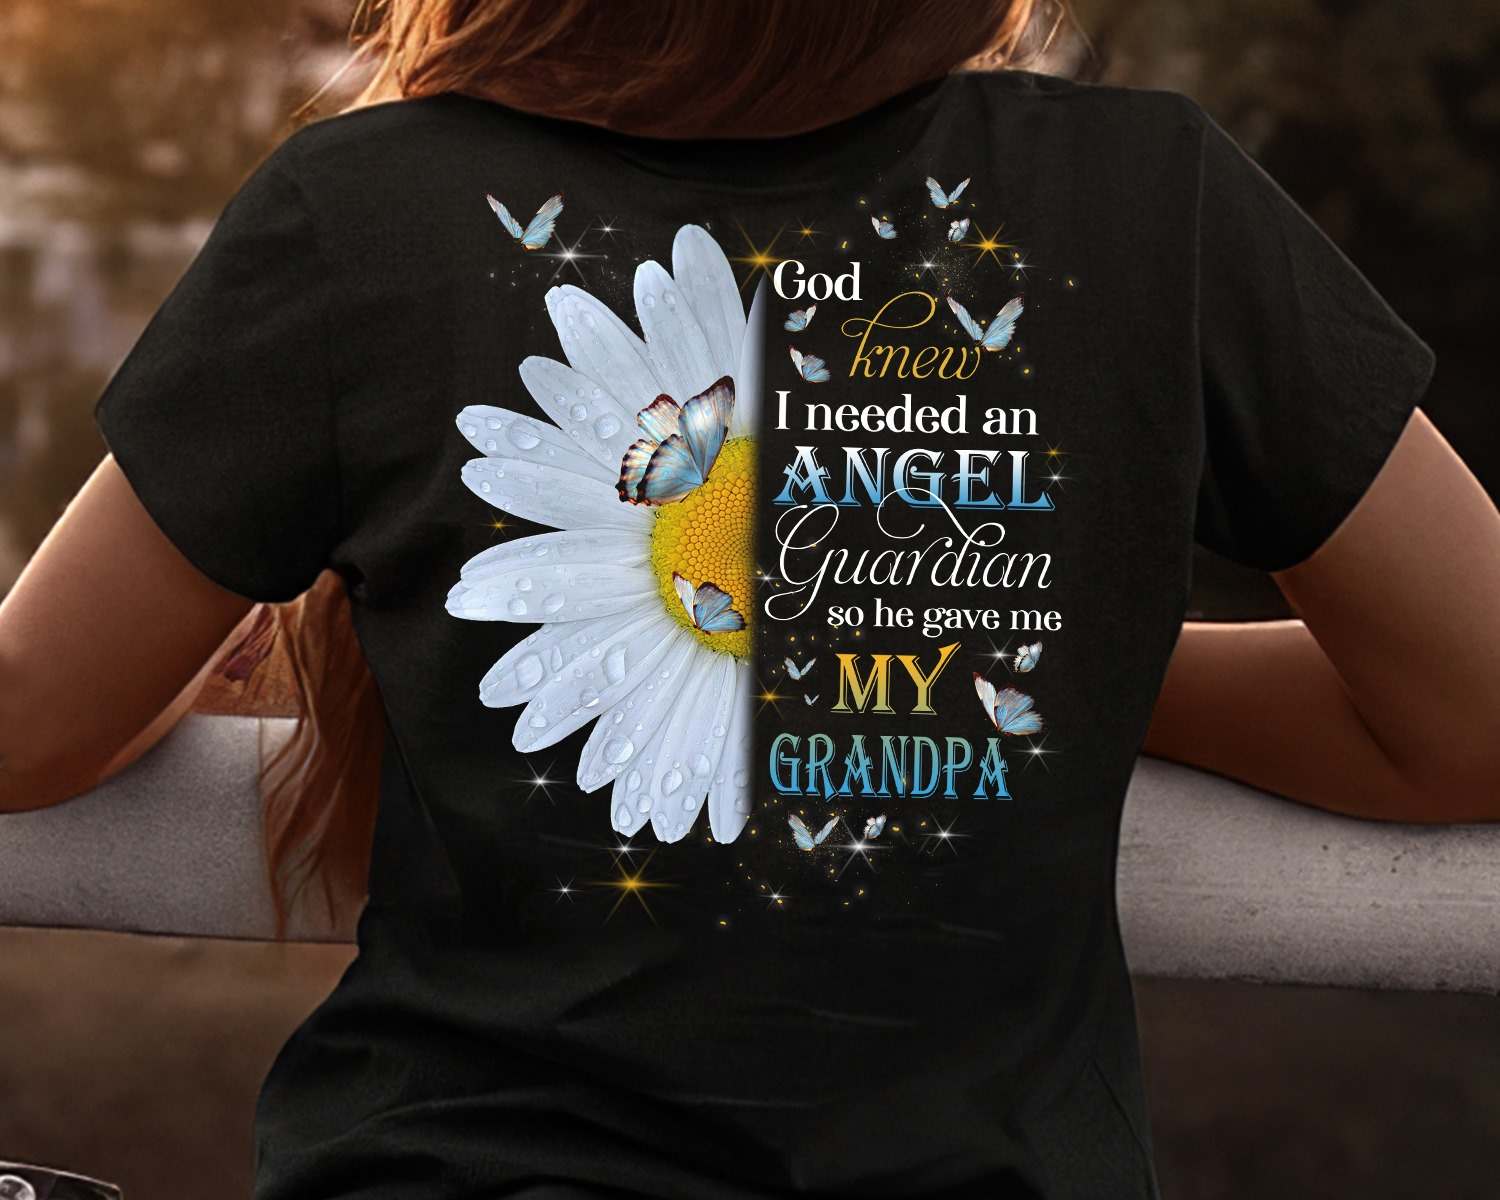 God knew I needed an angel guardian so he gave me my grandpa - Grandpa angel guardian